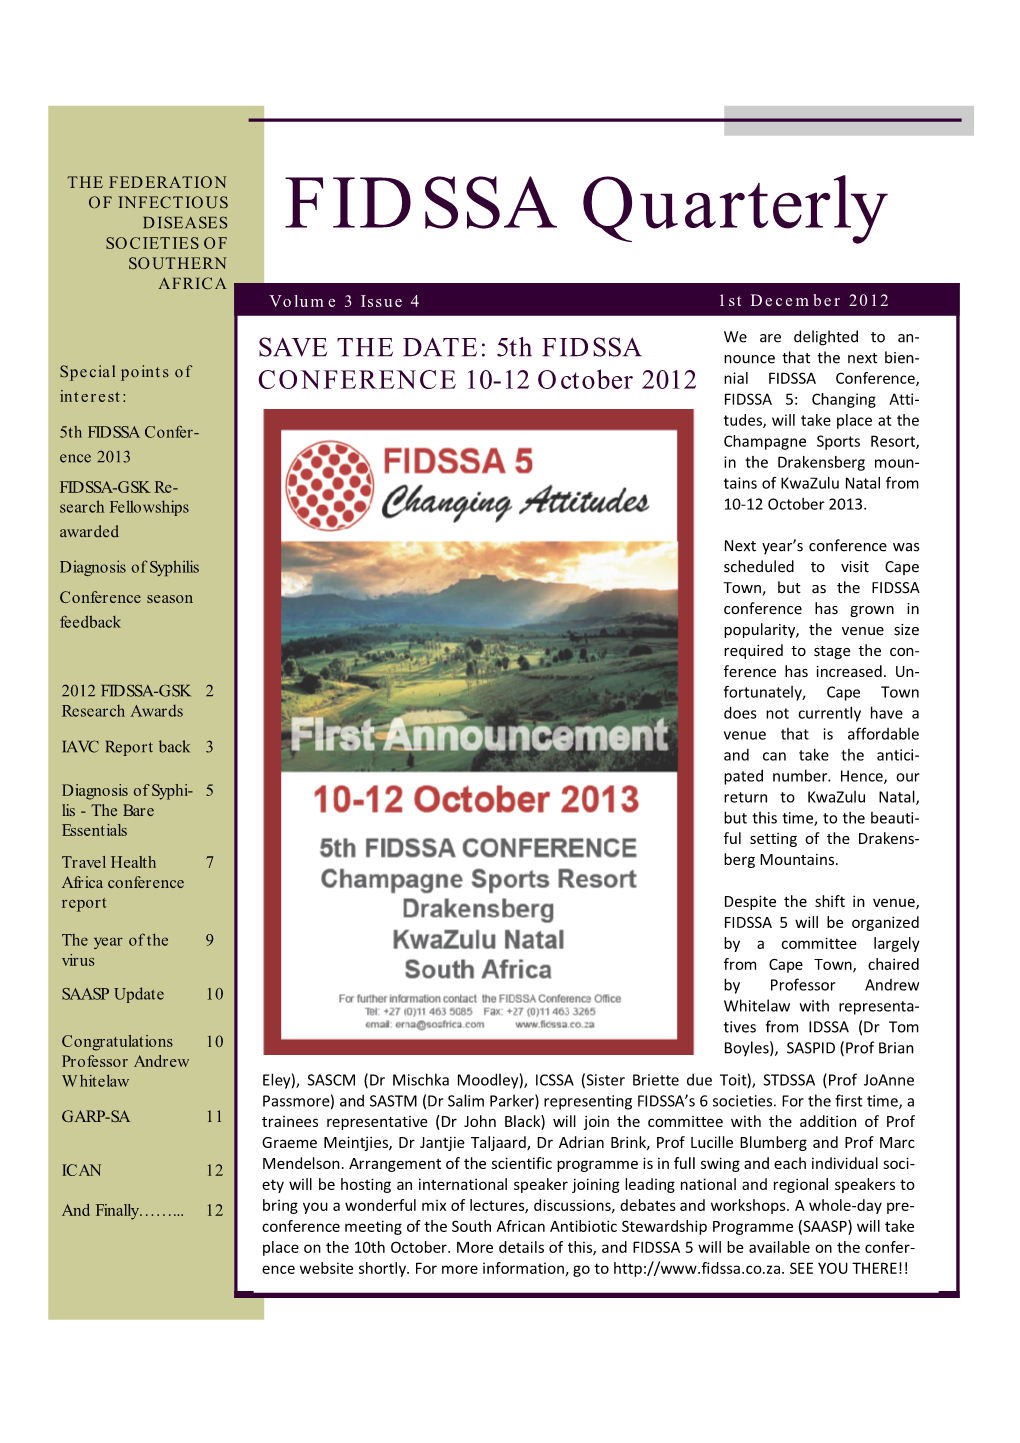 FIDSSA Quarterly Dec 2012